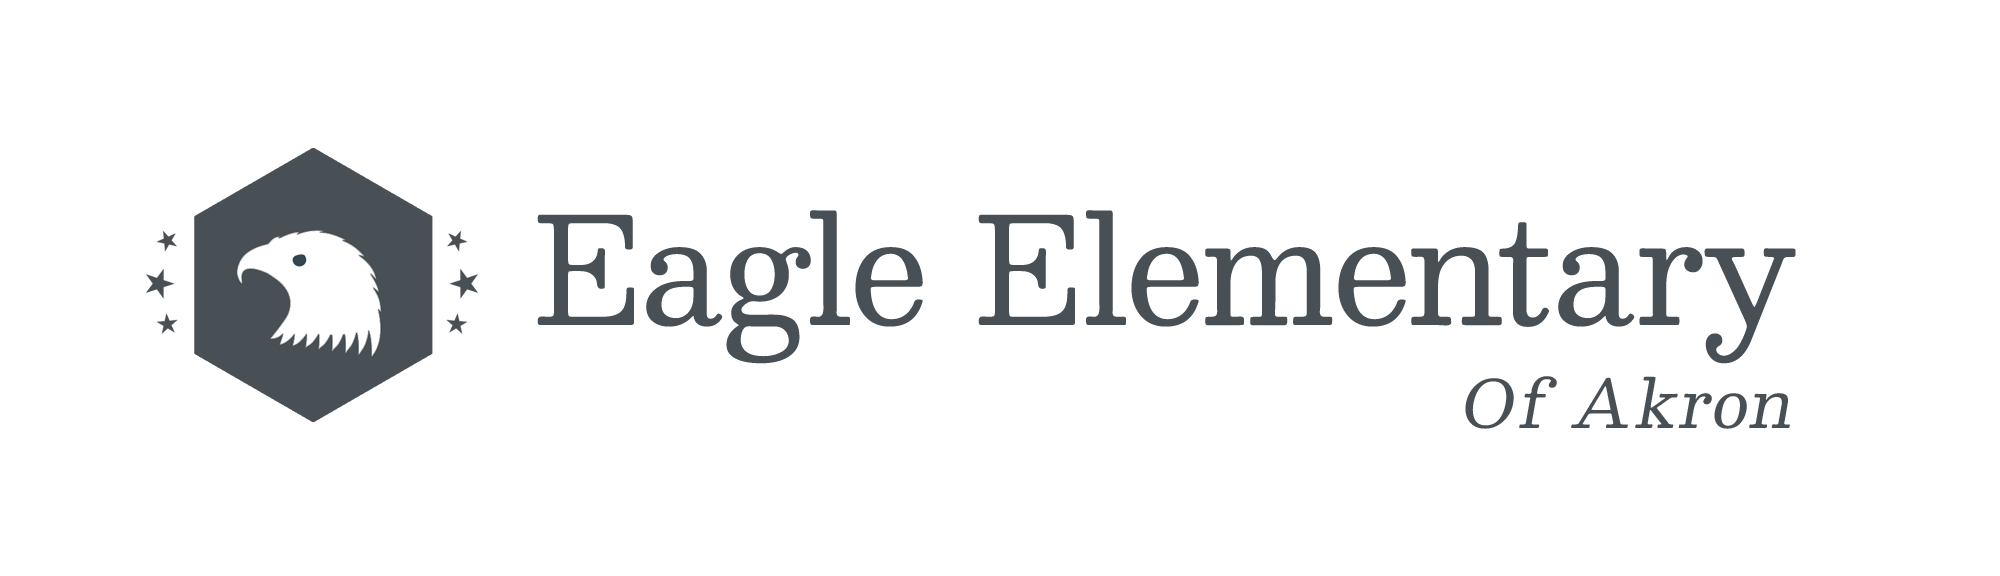 Eagle Elementary 